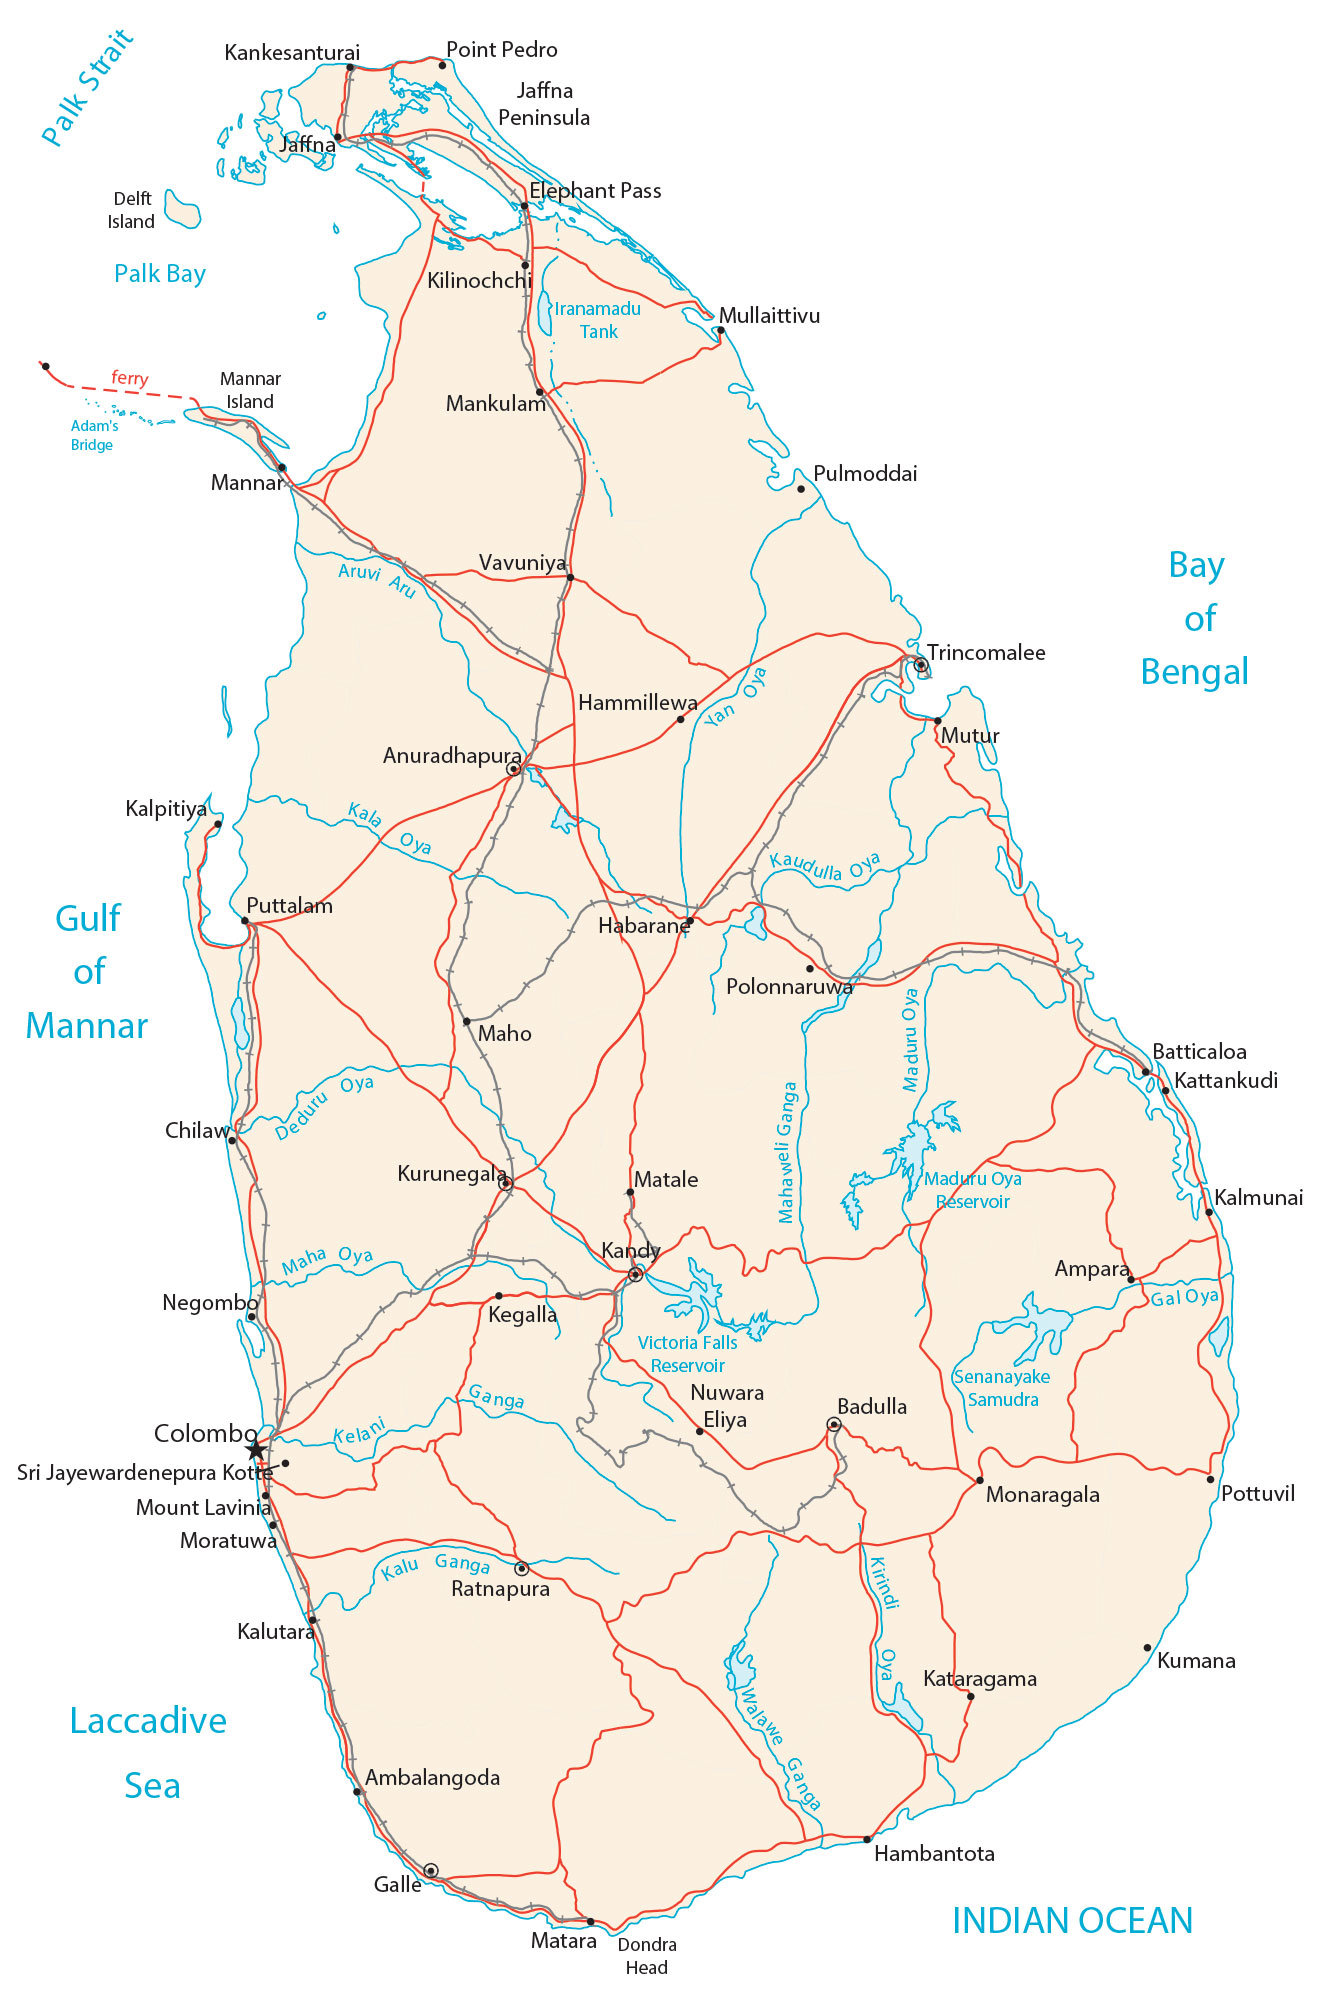 Sri Lanka Map - GIS Geography